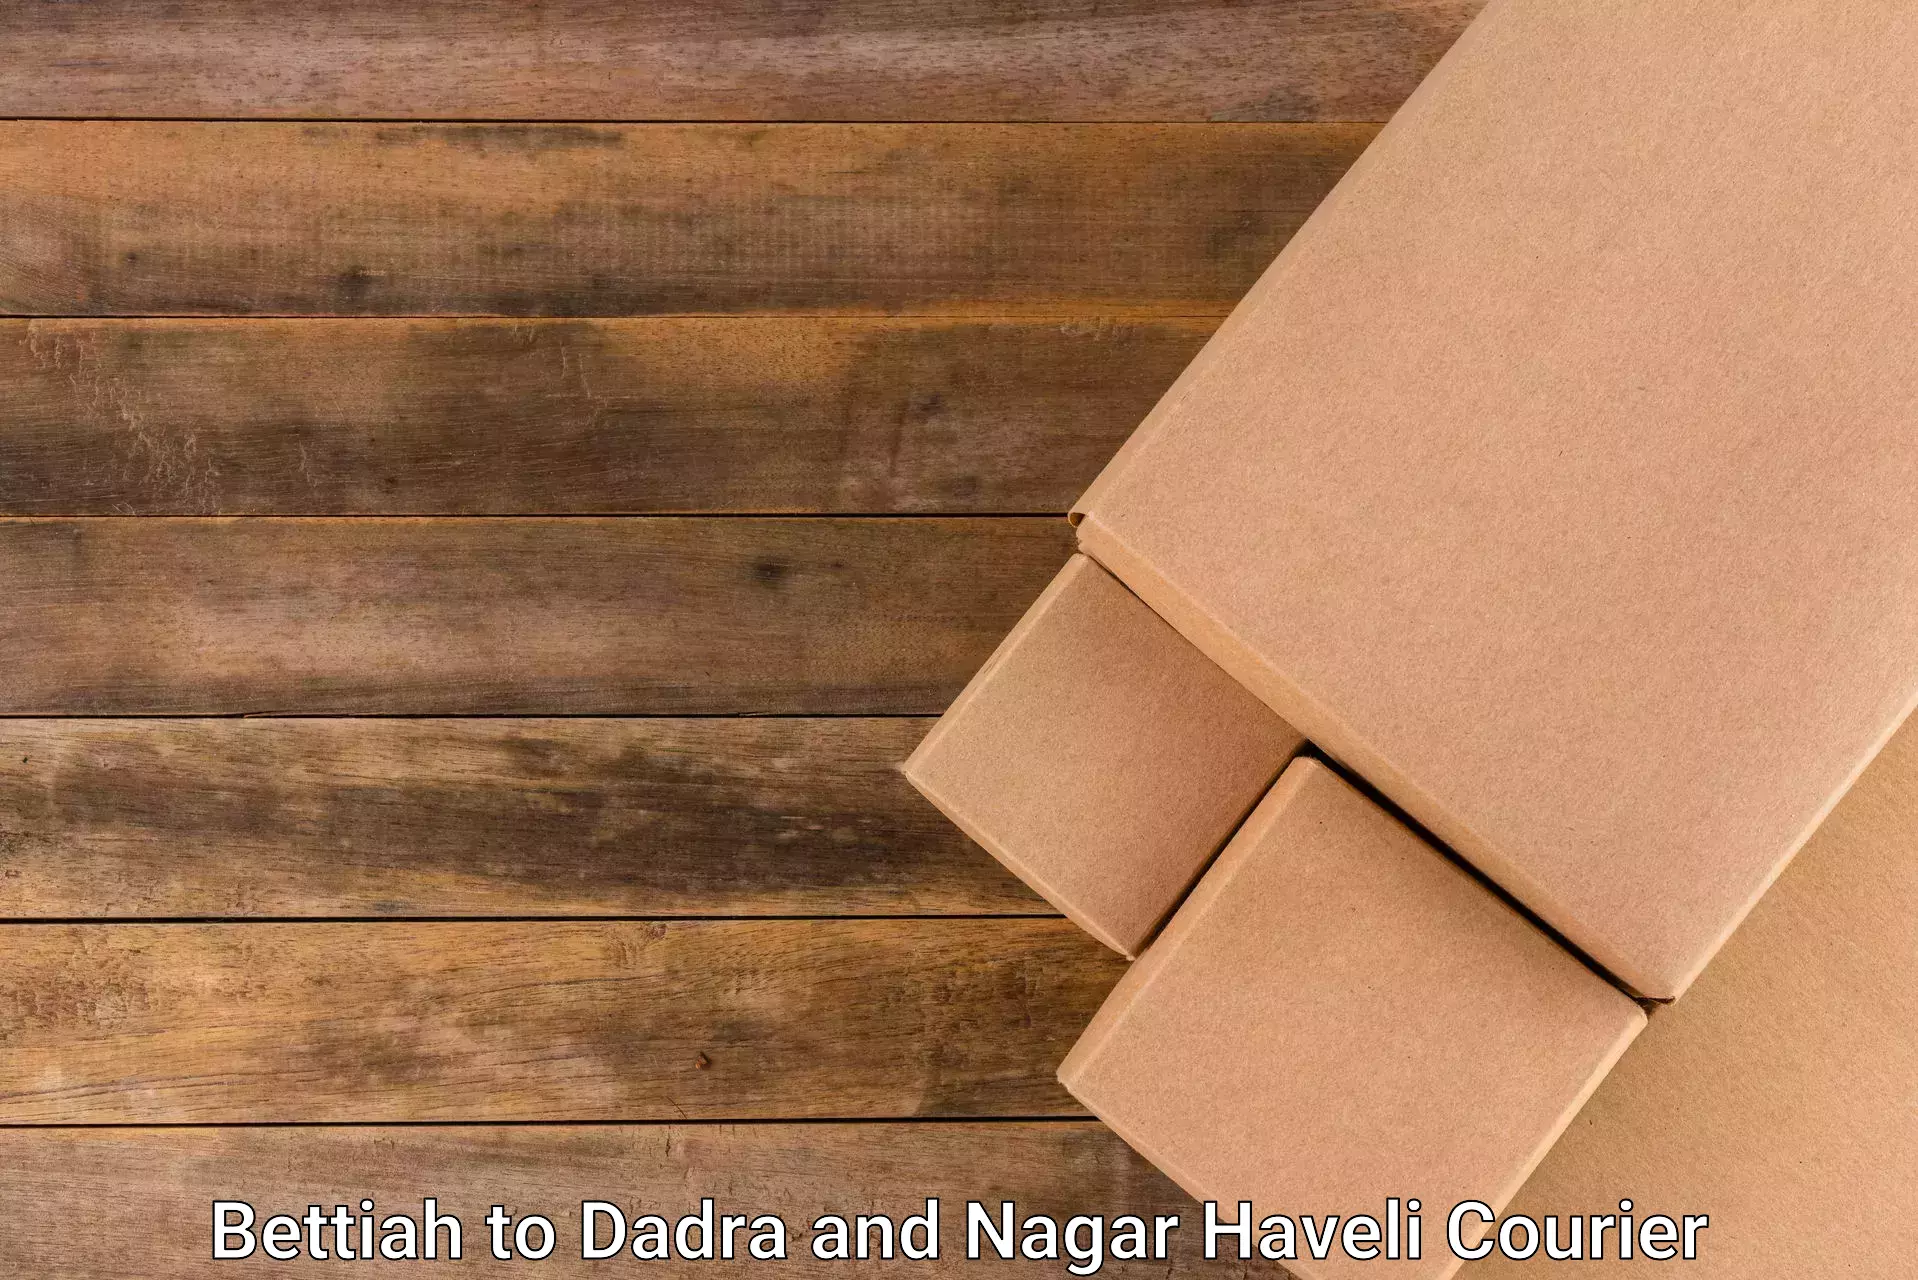 International parcel service Bettiah to Dadra and Nagar Haveli